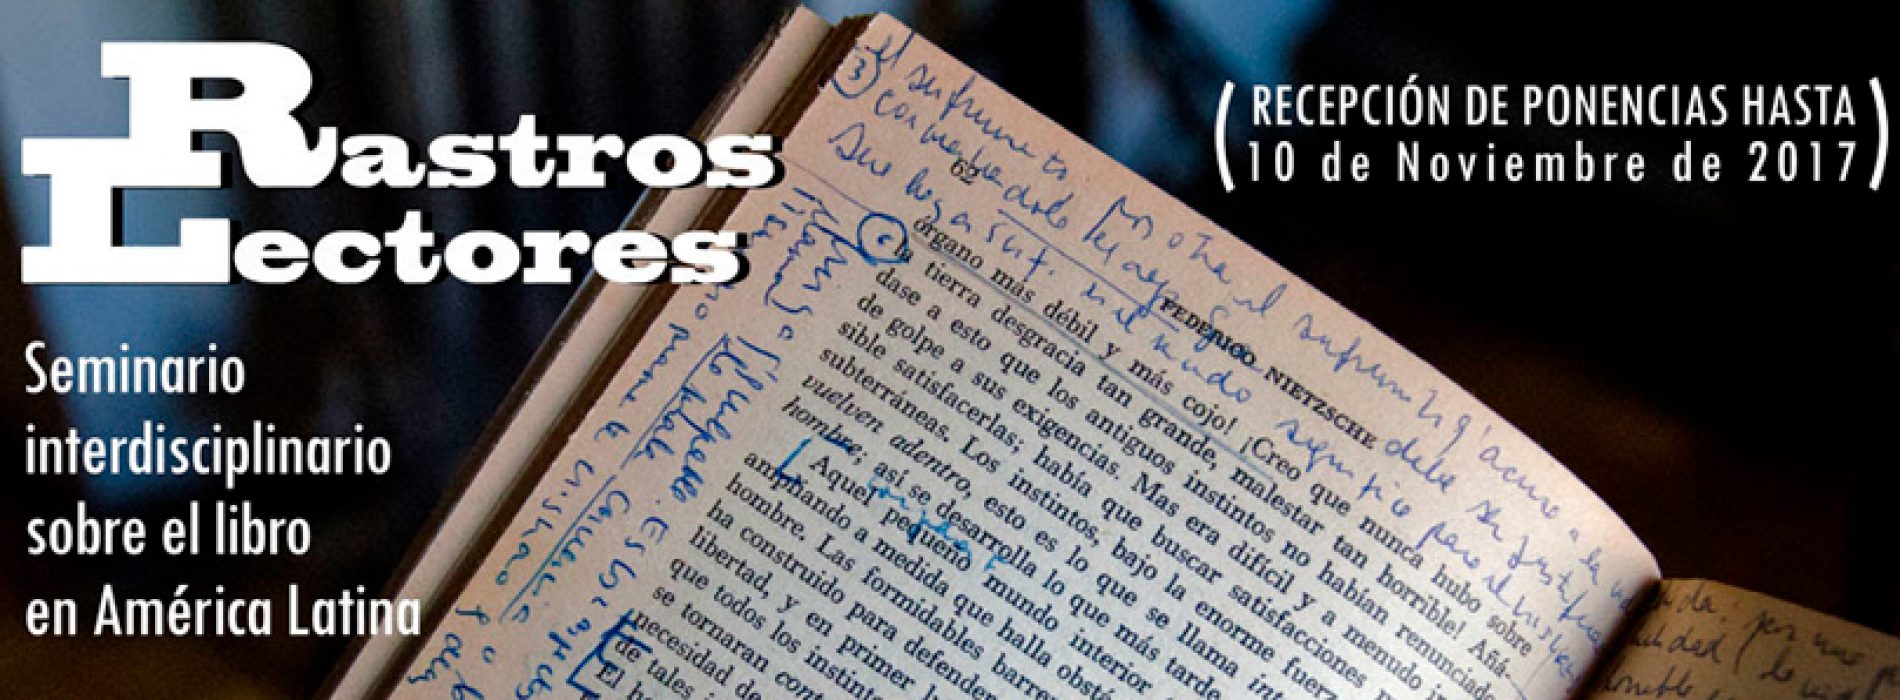 Call for seminar on the book in Latin America insterdisciplinario #RastrosLectores